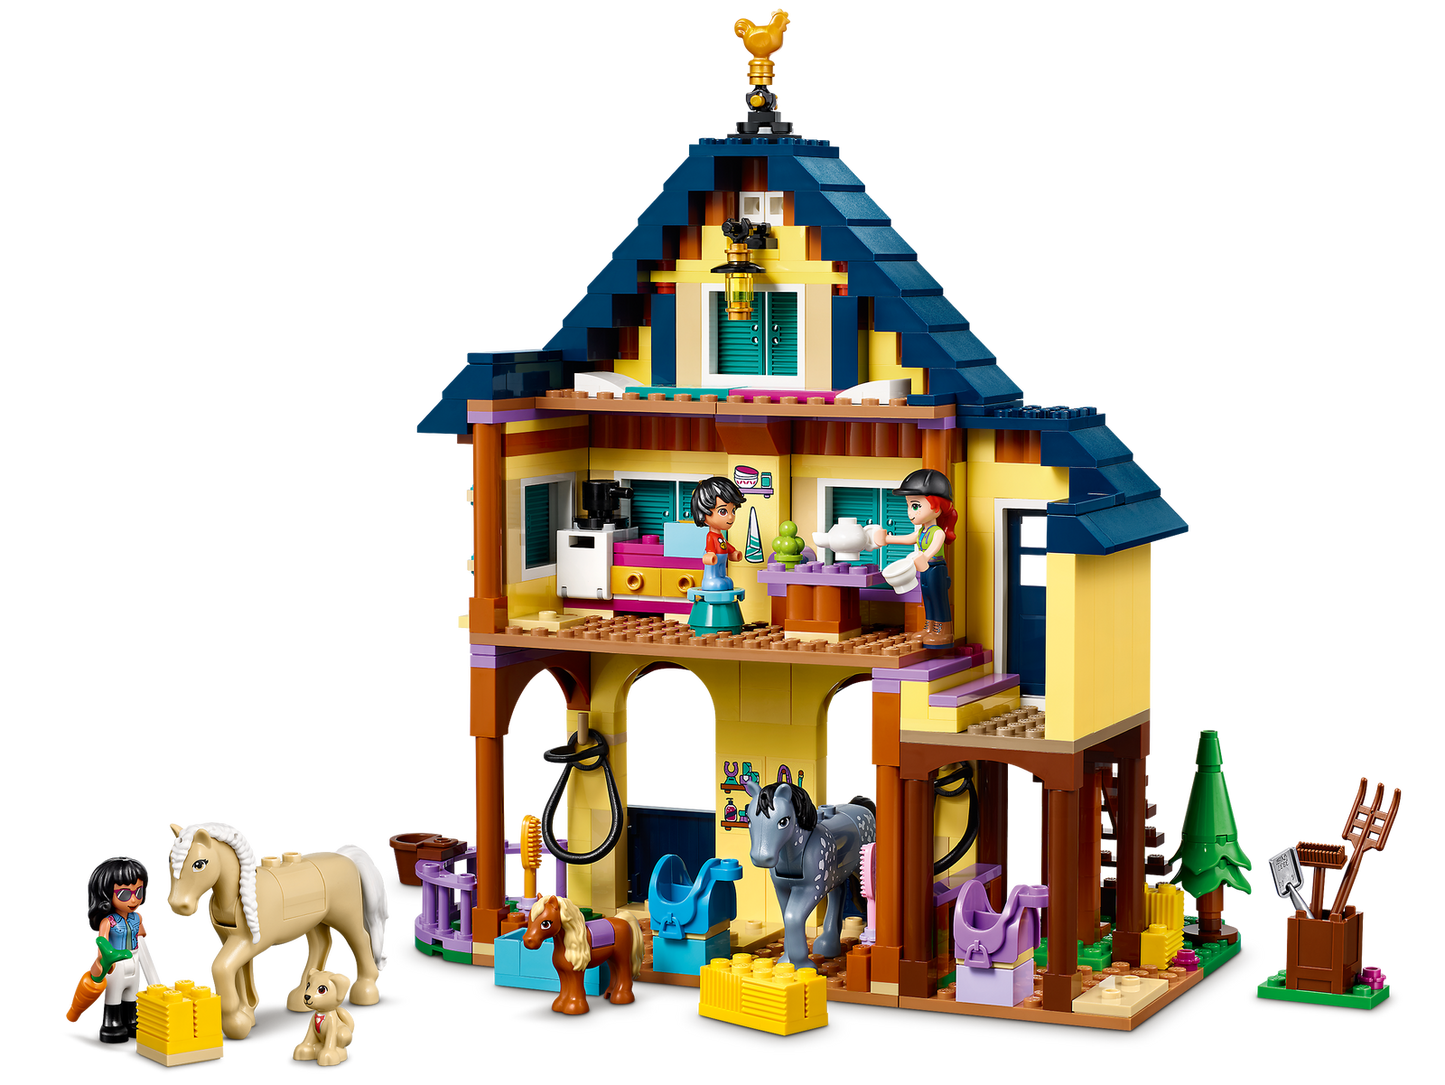 LEGO Friends Forest Horseback Riding Center 41683